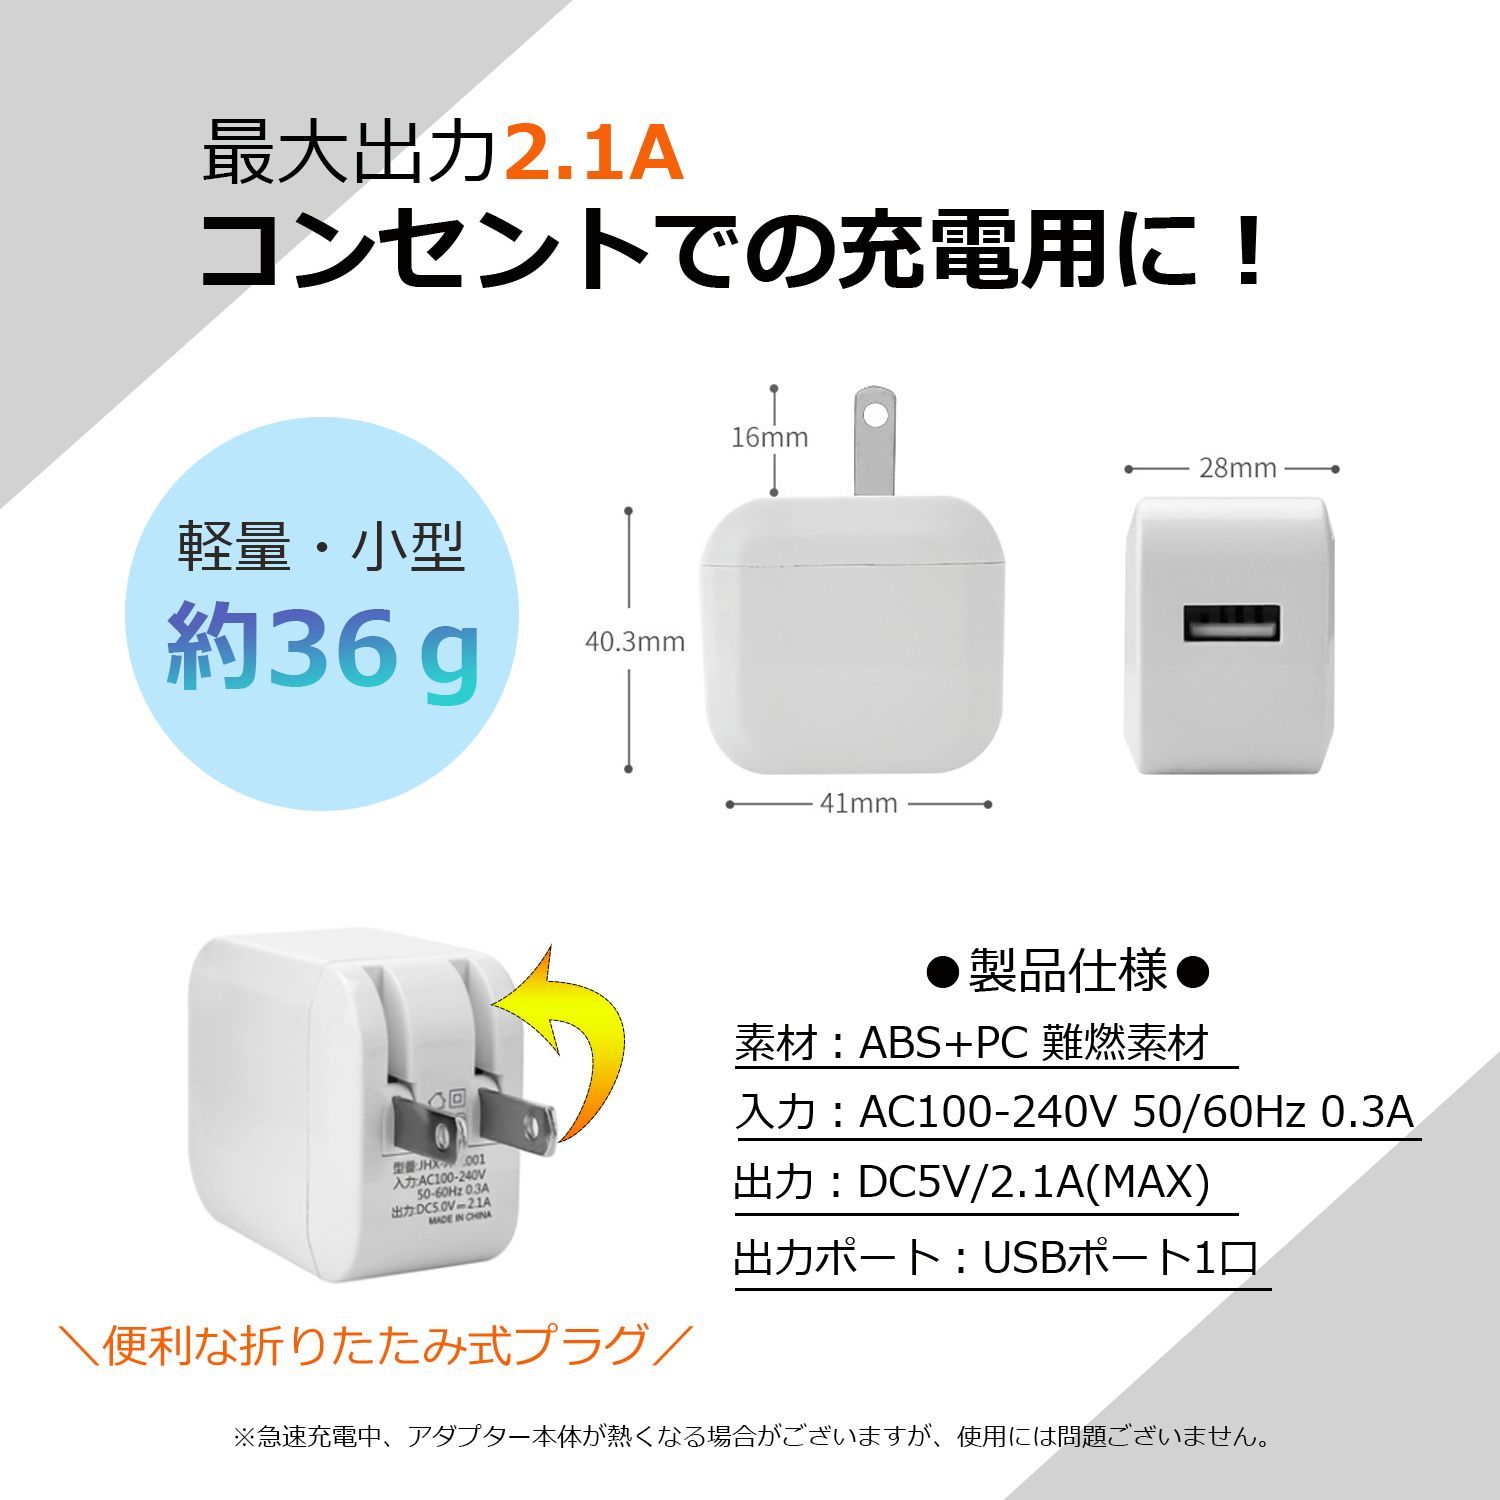 DMW-BLK22 パナソニック 互換USB充電器 ☆ACアダプター付き☆ 2 - メルカリ